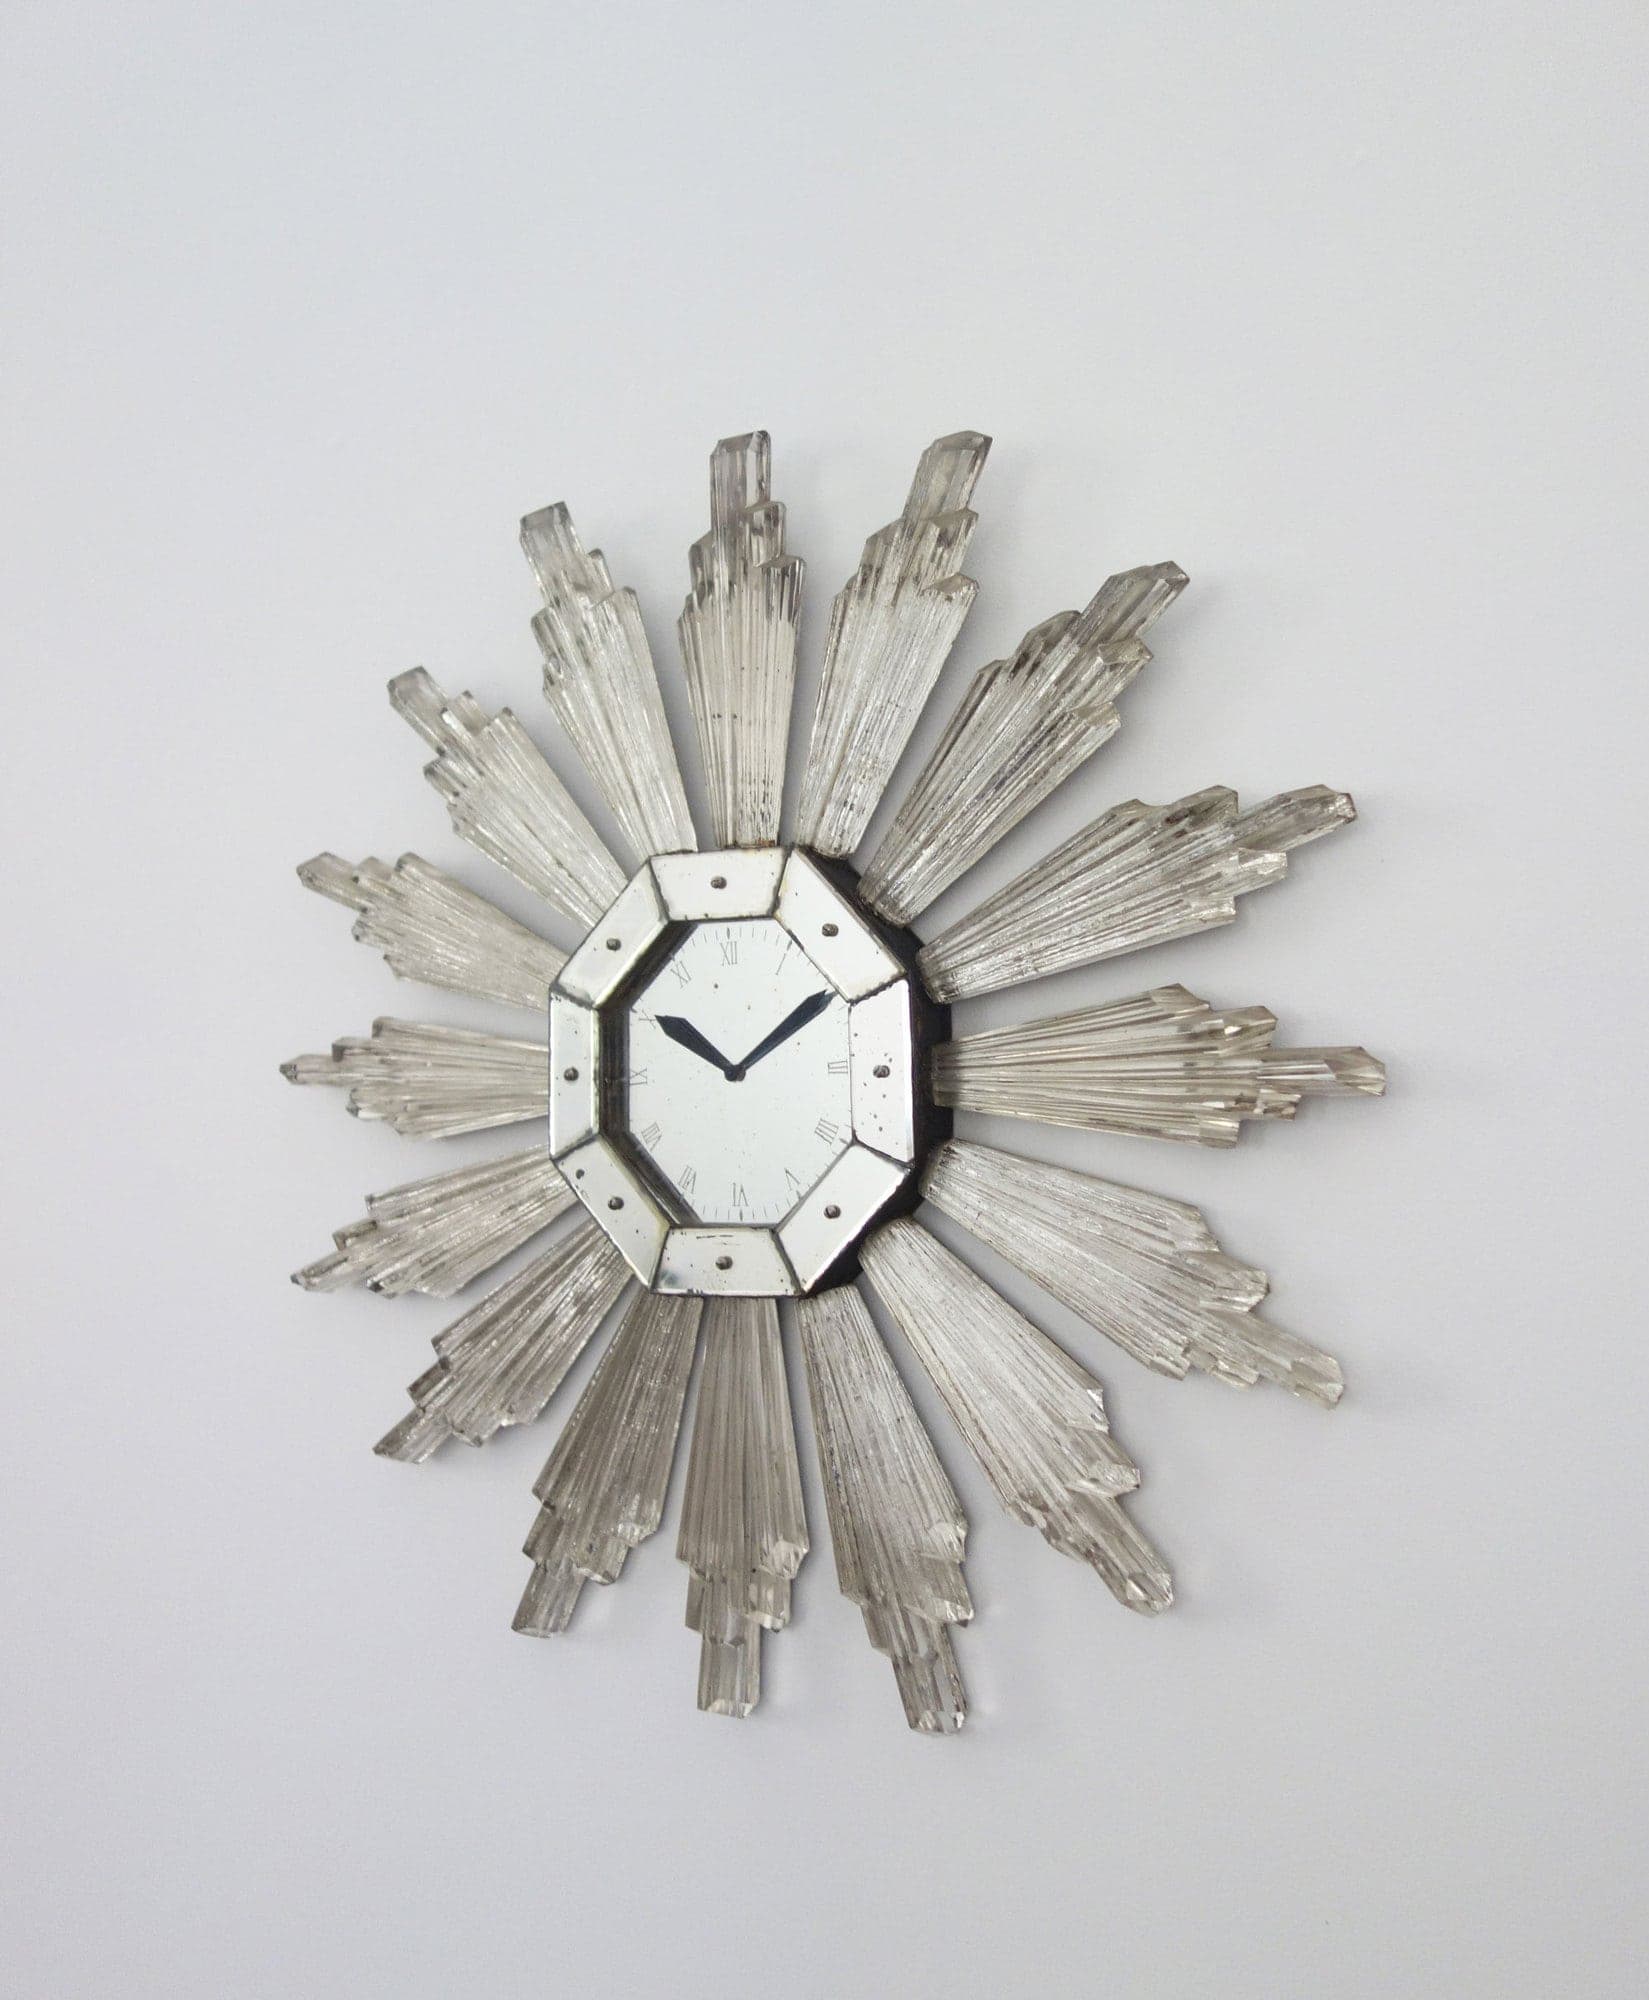 Serge Roche, Très rare horloge murale (vendue), vue 01